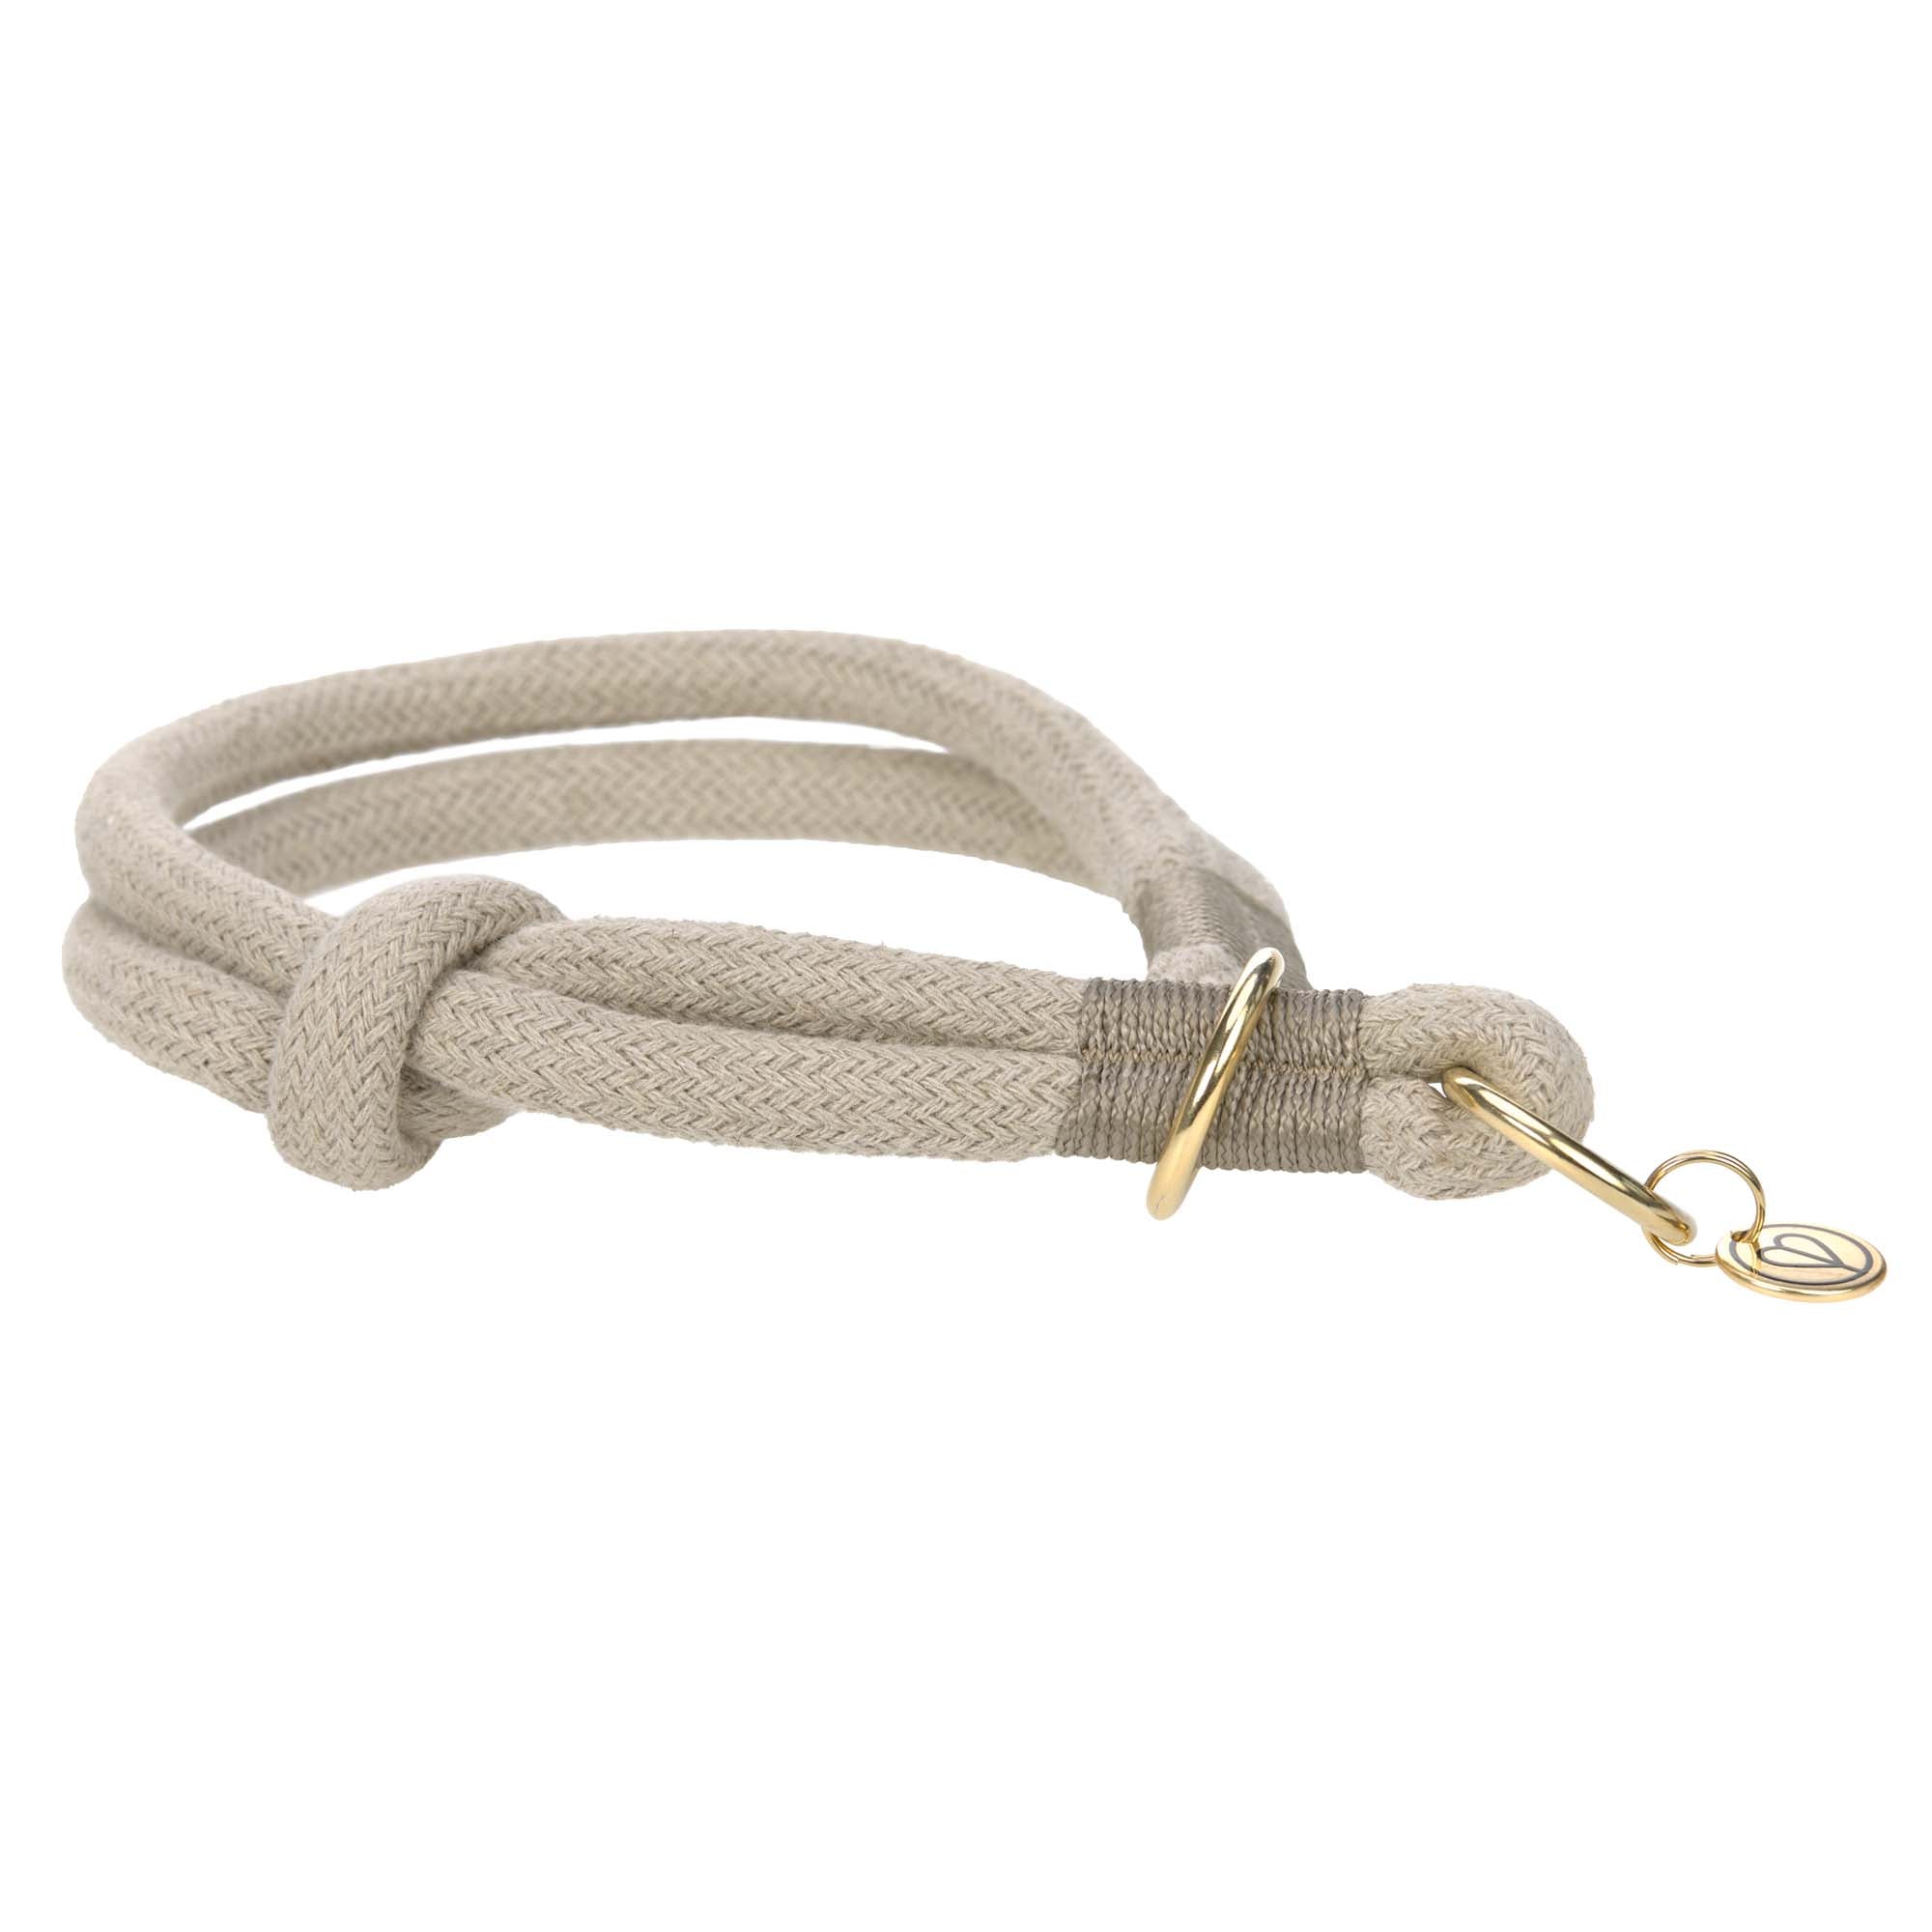 Braided dog collar - Mila, natural